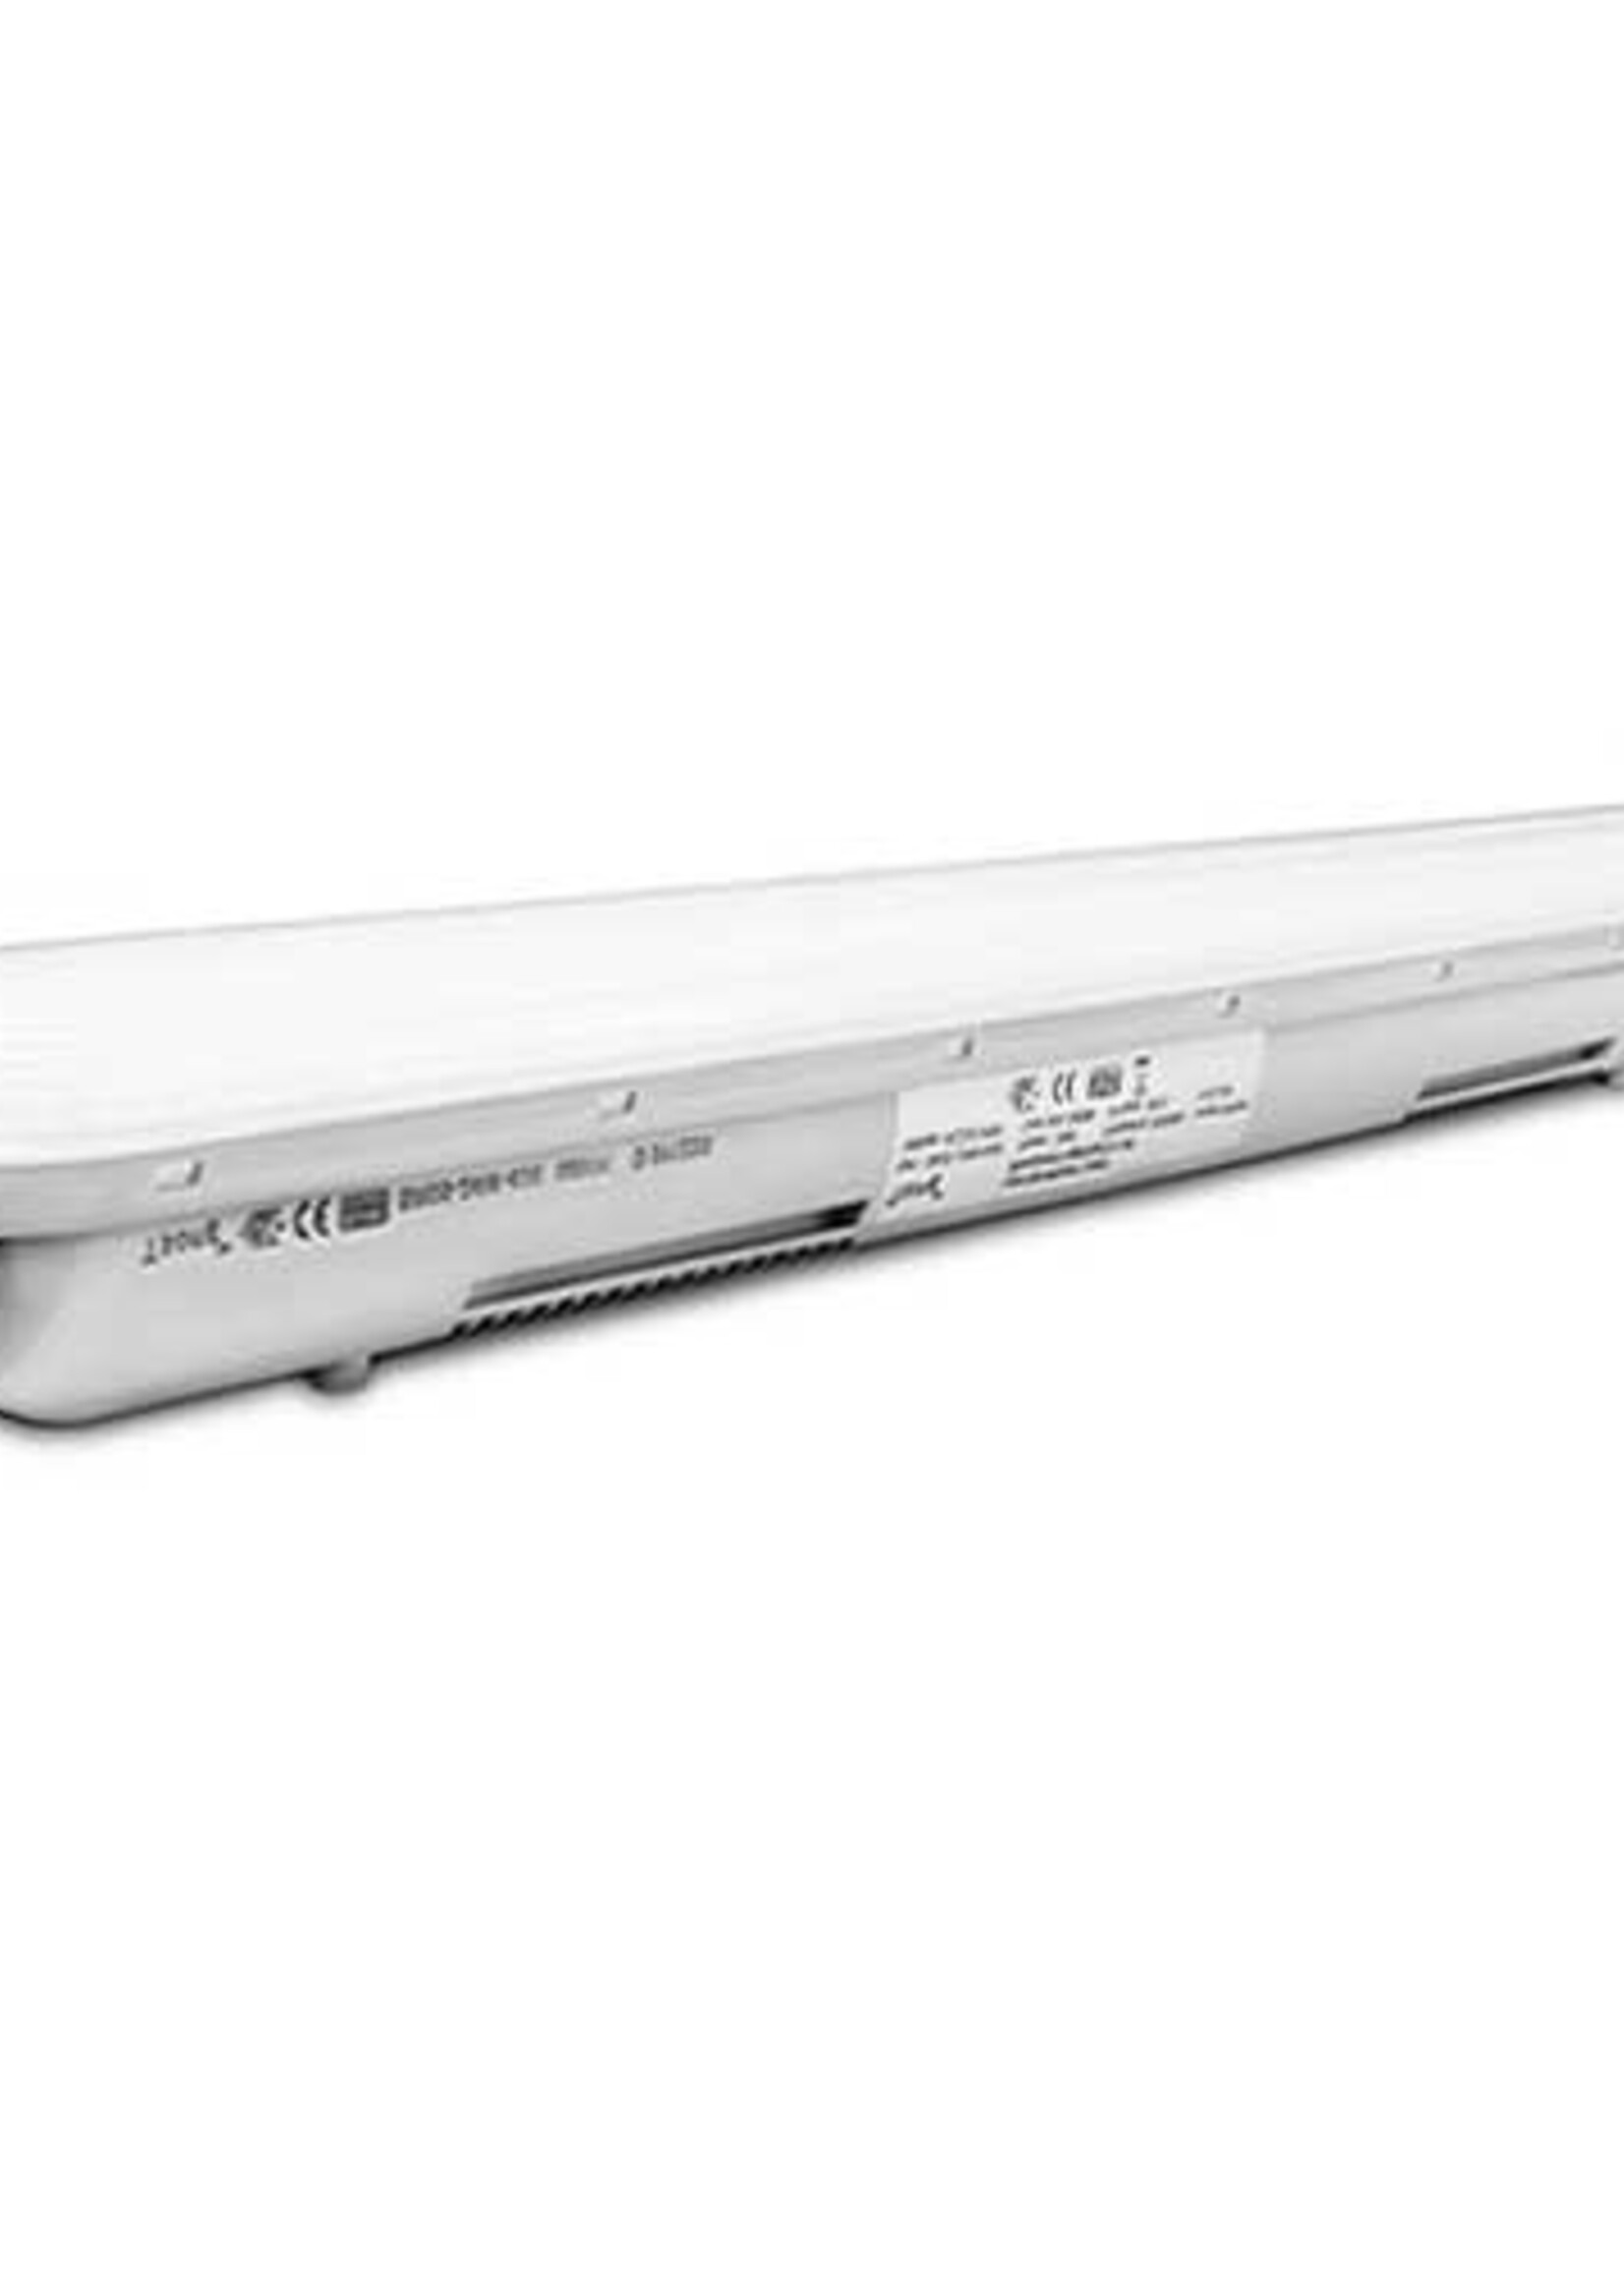 LEDWINKEL-Online LED Tri-Proof Light IP65 Water resistant 150cm 50W